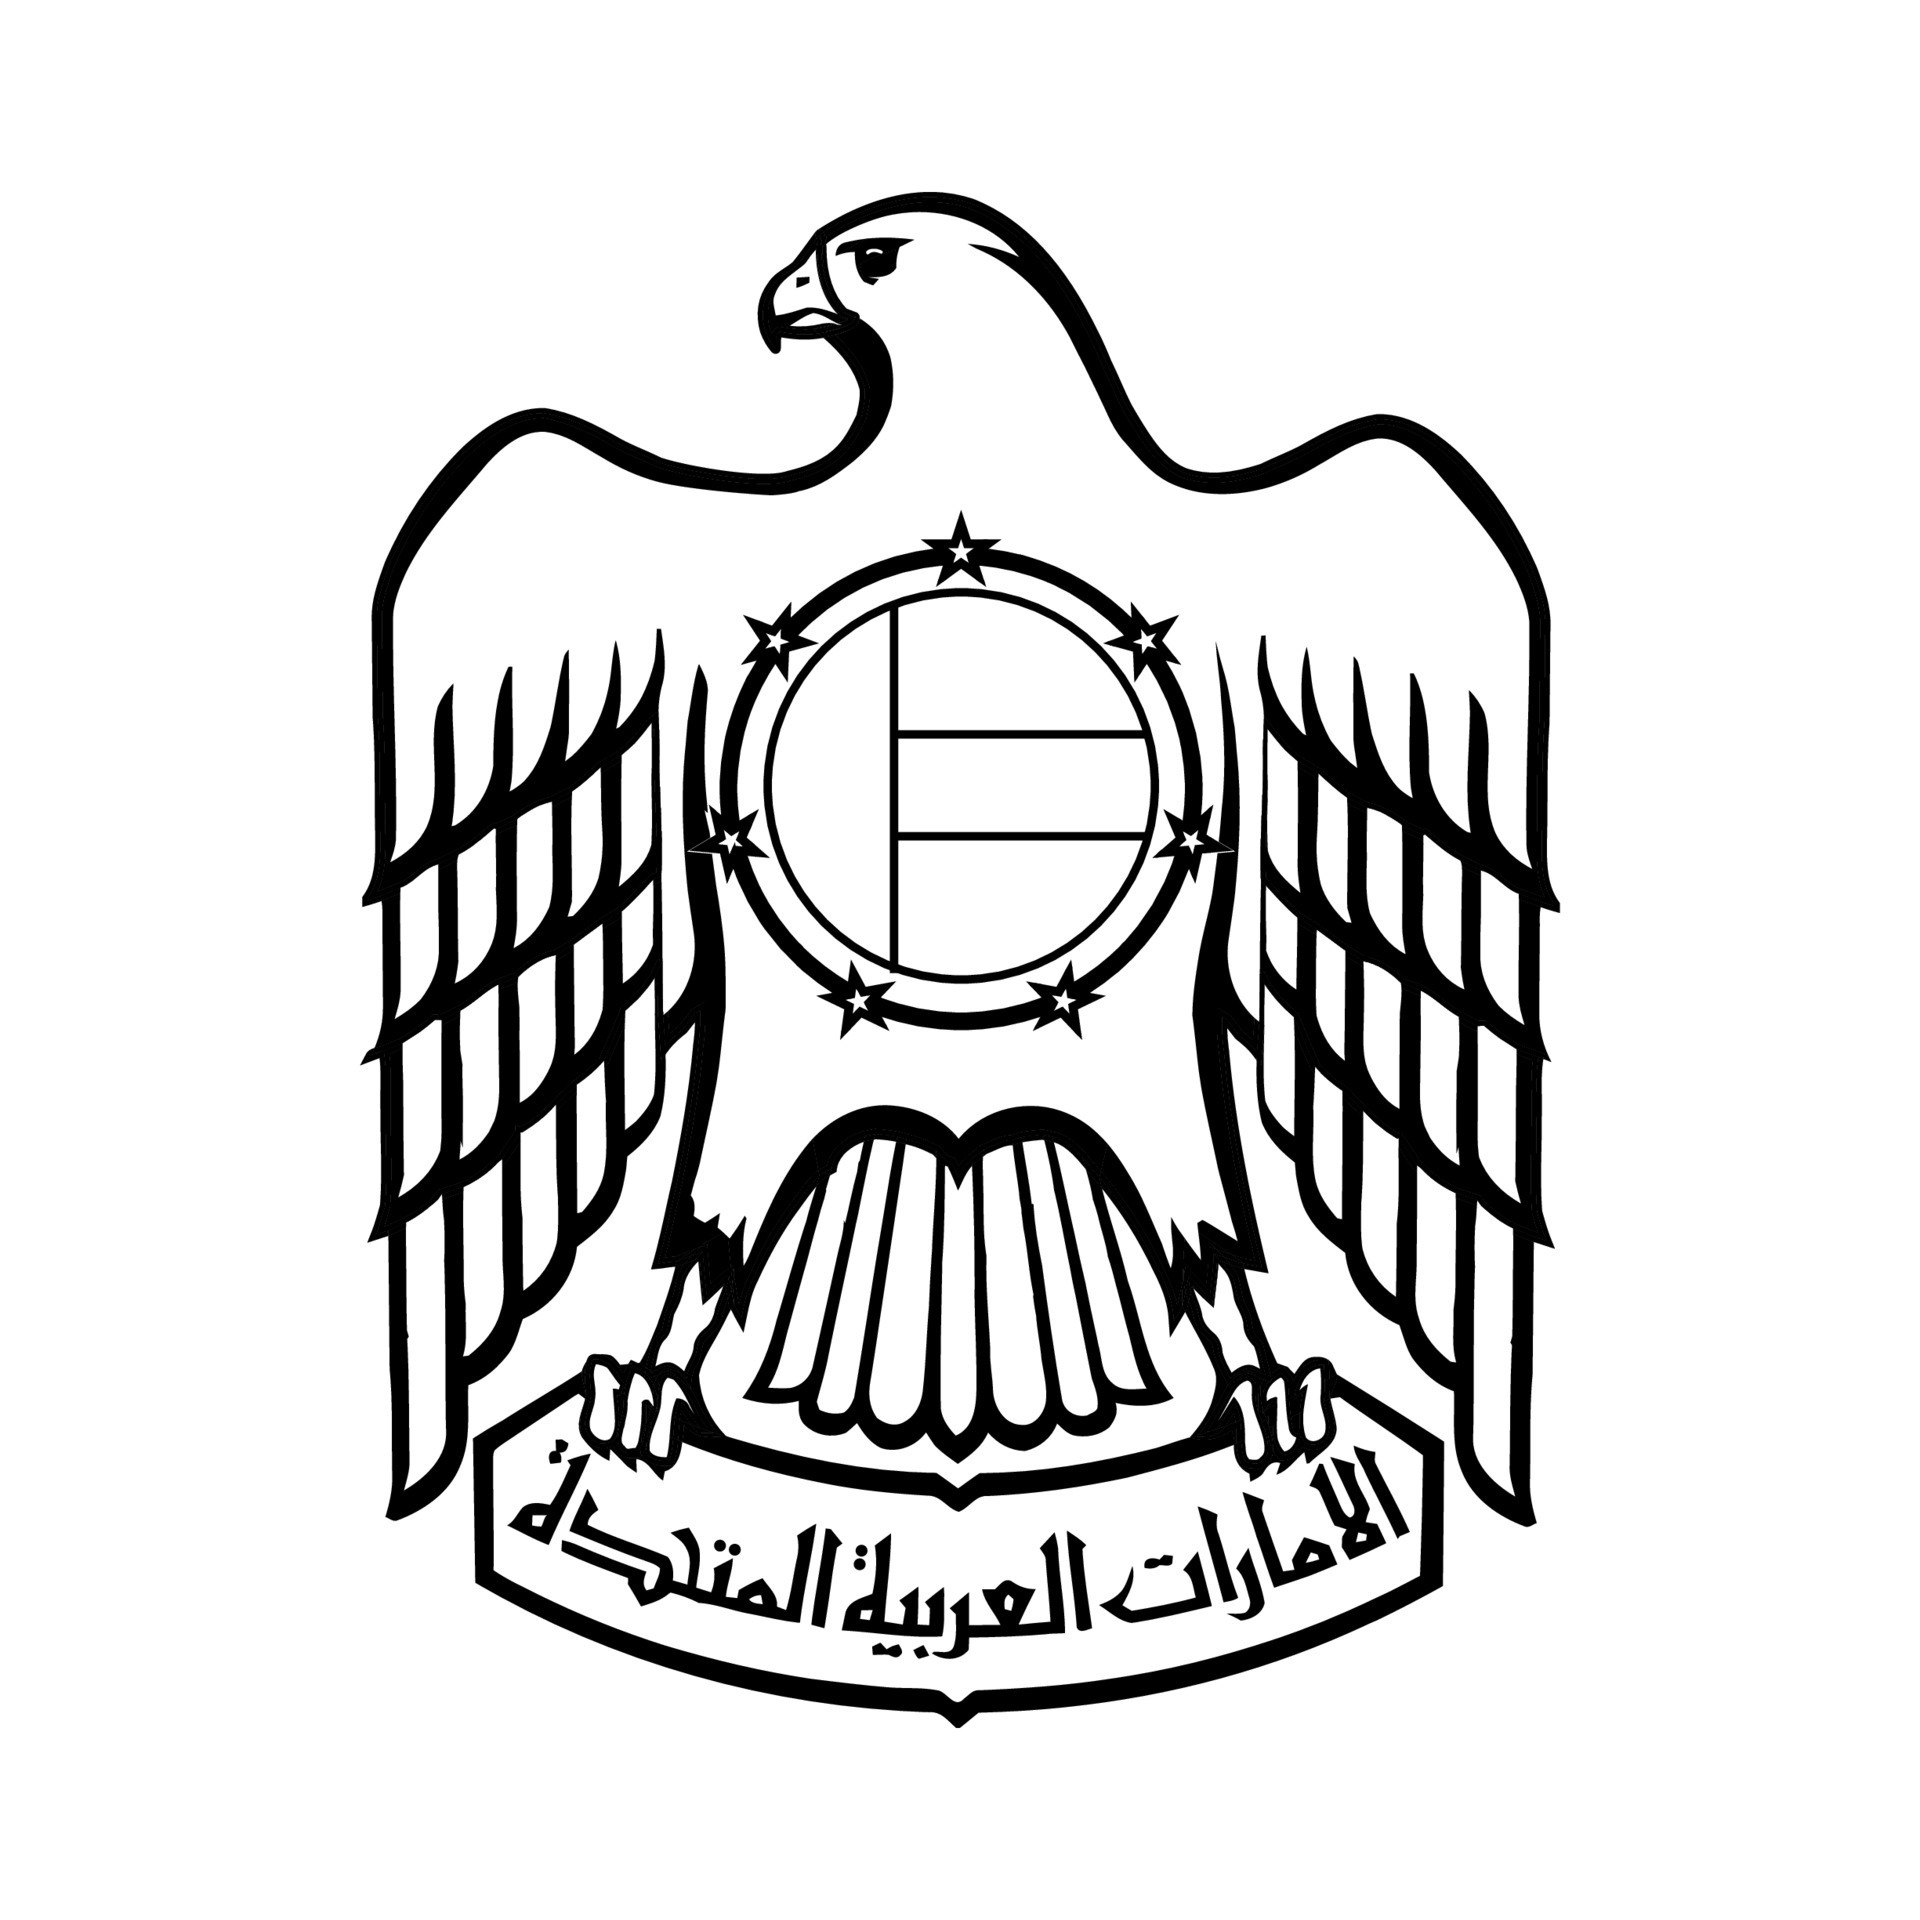 UAE Logo designs